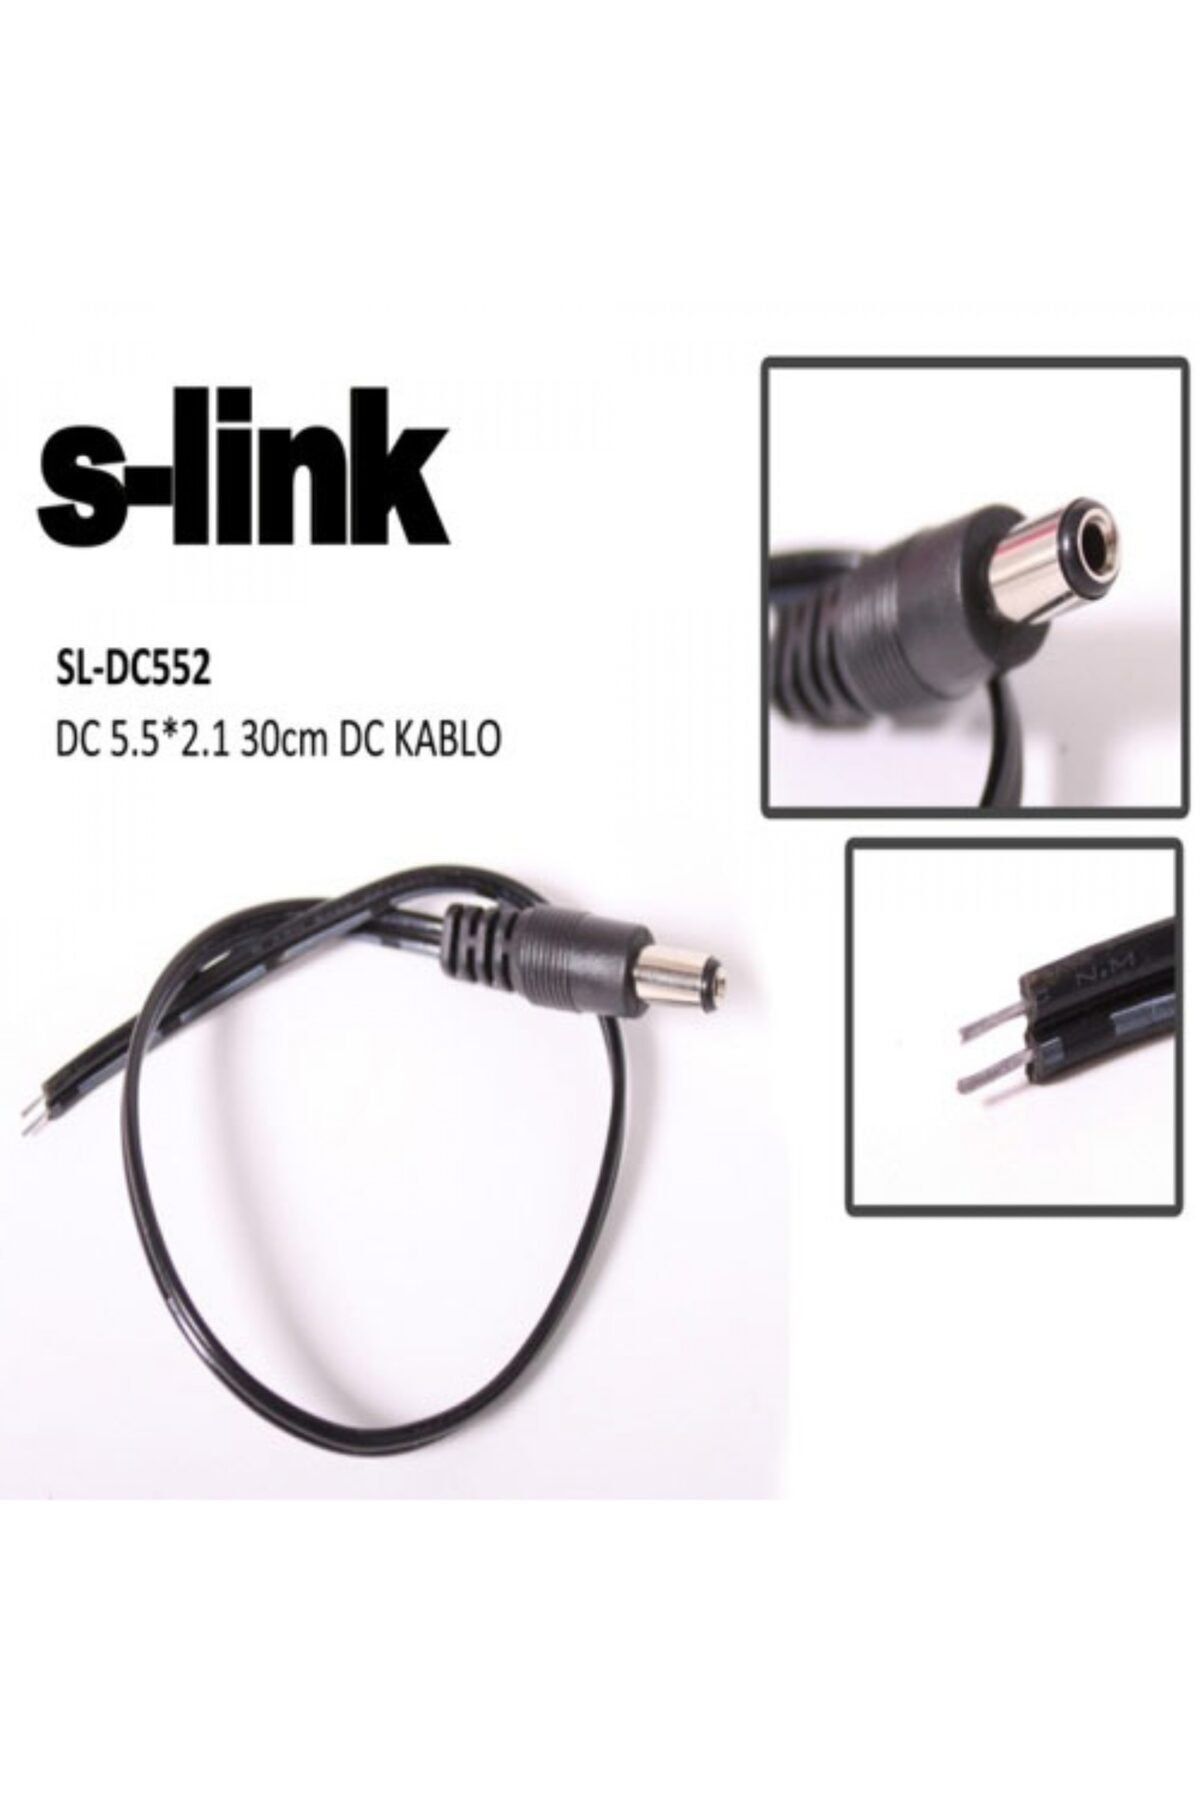 S-Link Sl-dc552 Kablulu Voltaj Jakı